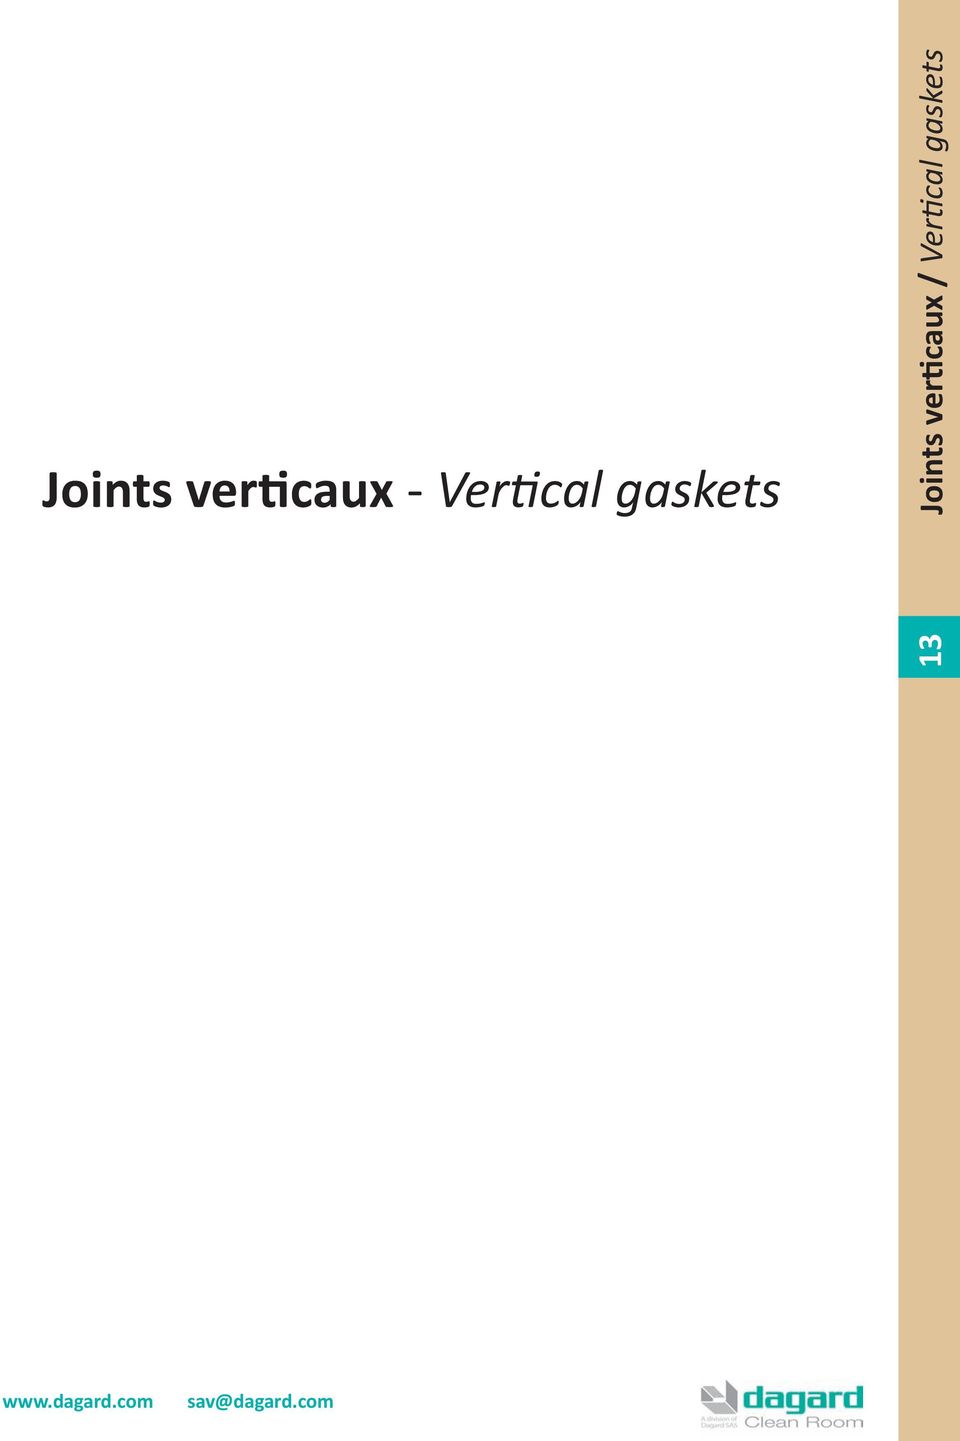 verticaux / Vertical